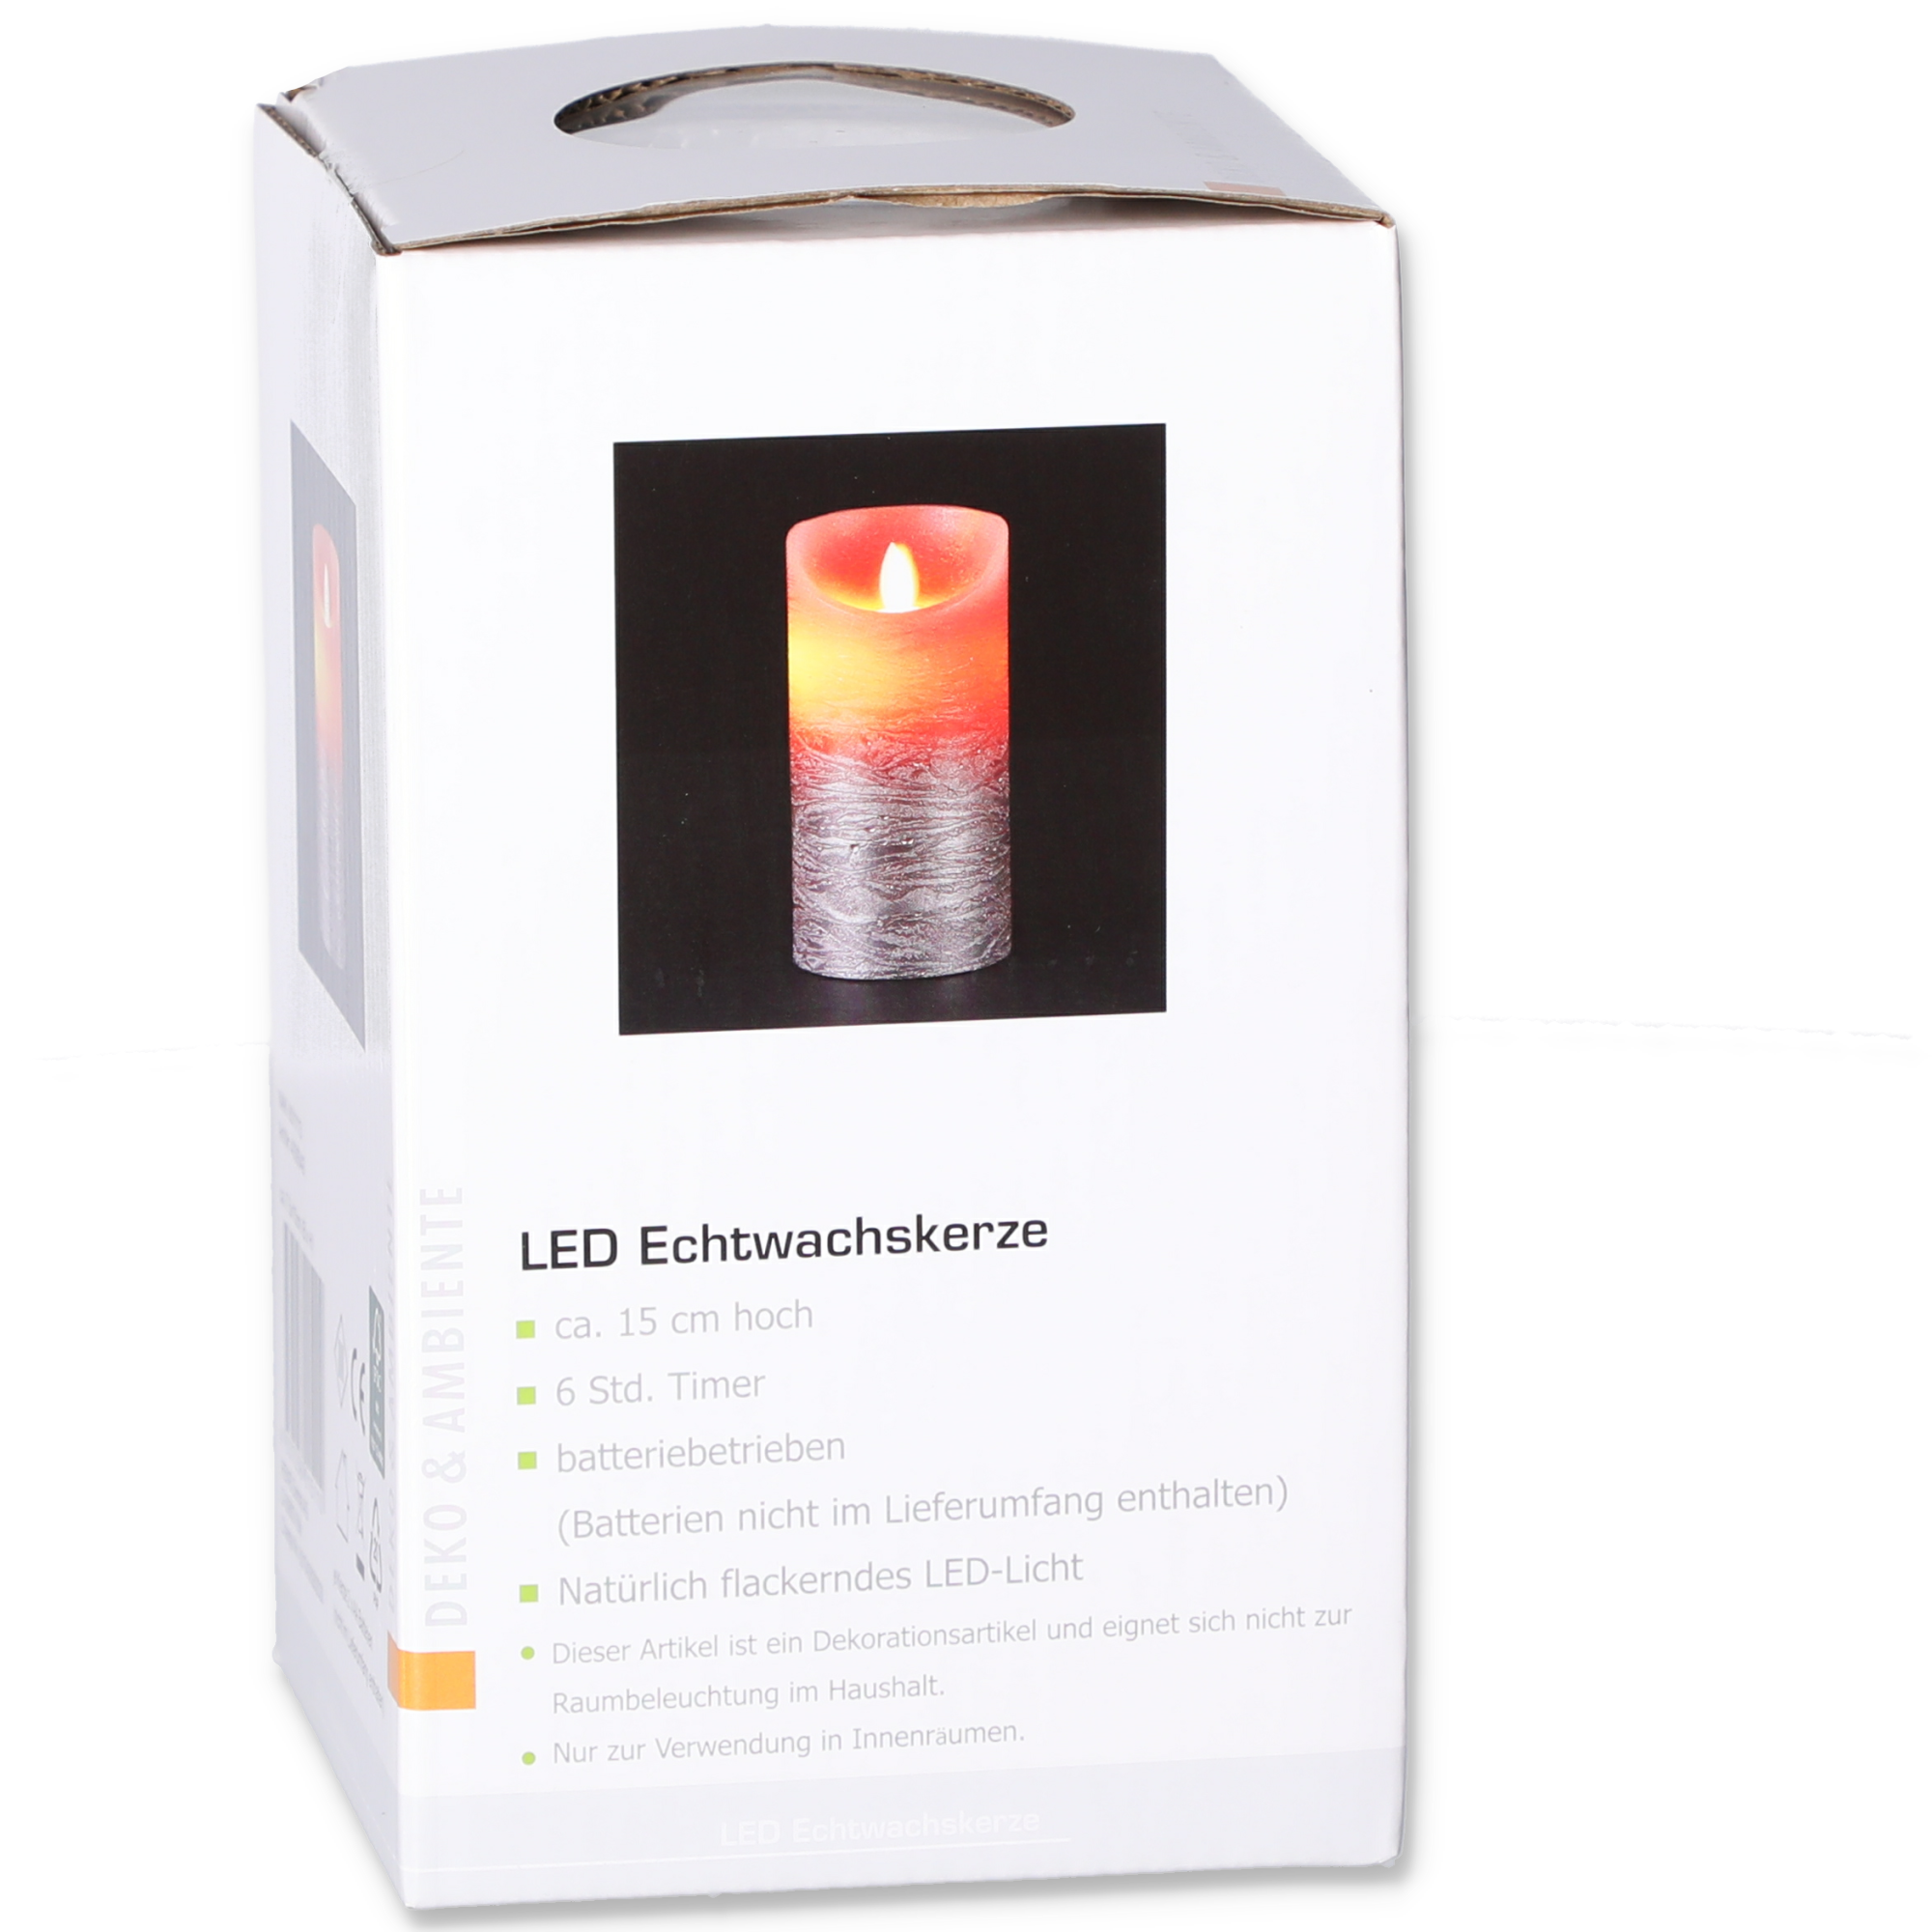 LED-Echtwachskerze rosa/silbern Ø 7 x 15 cm + product picture